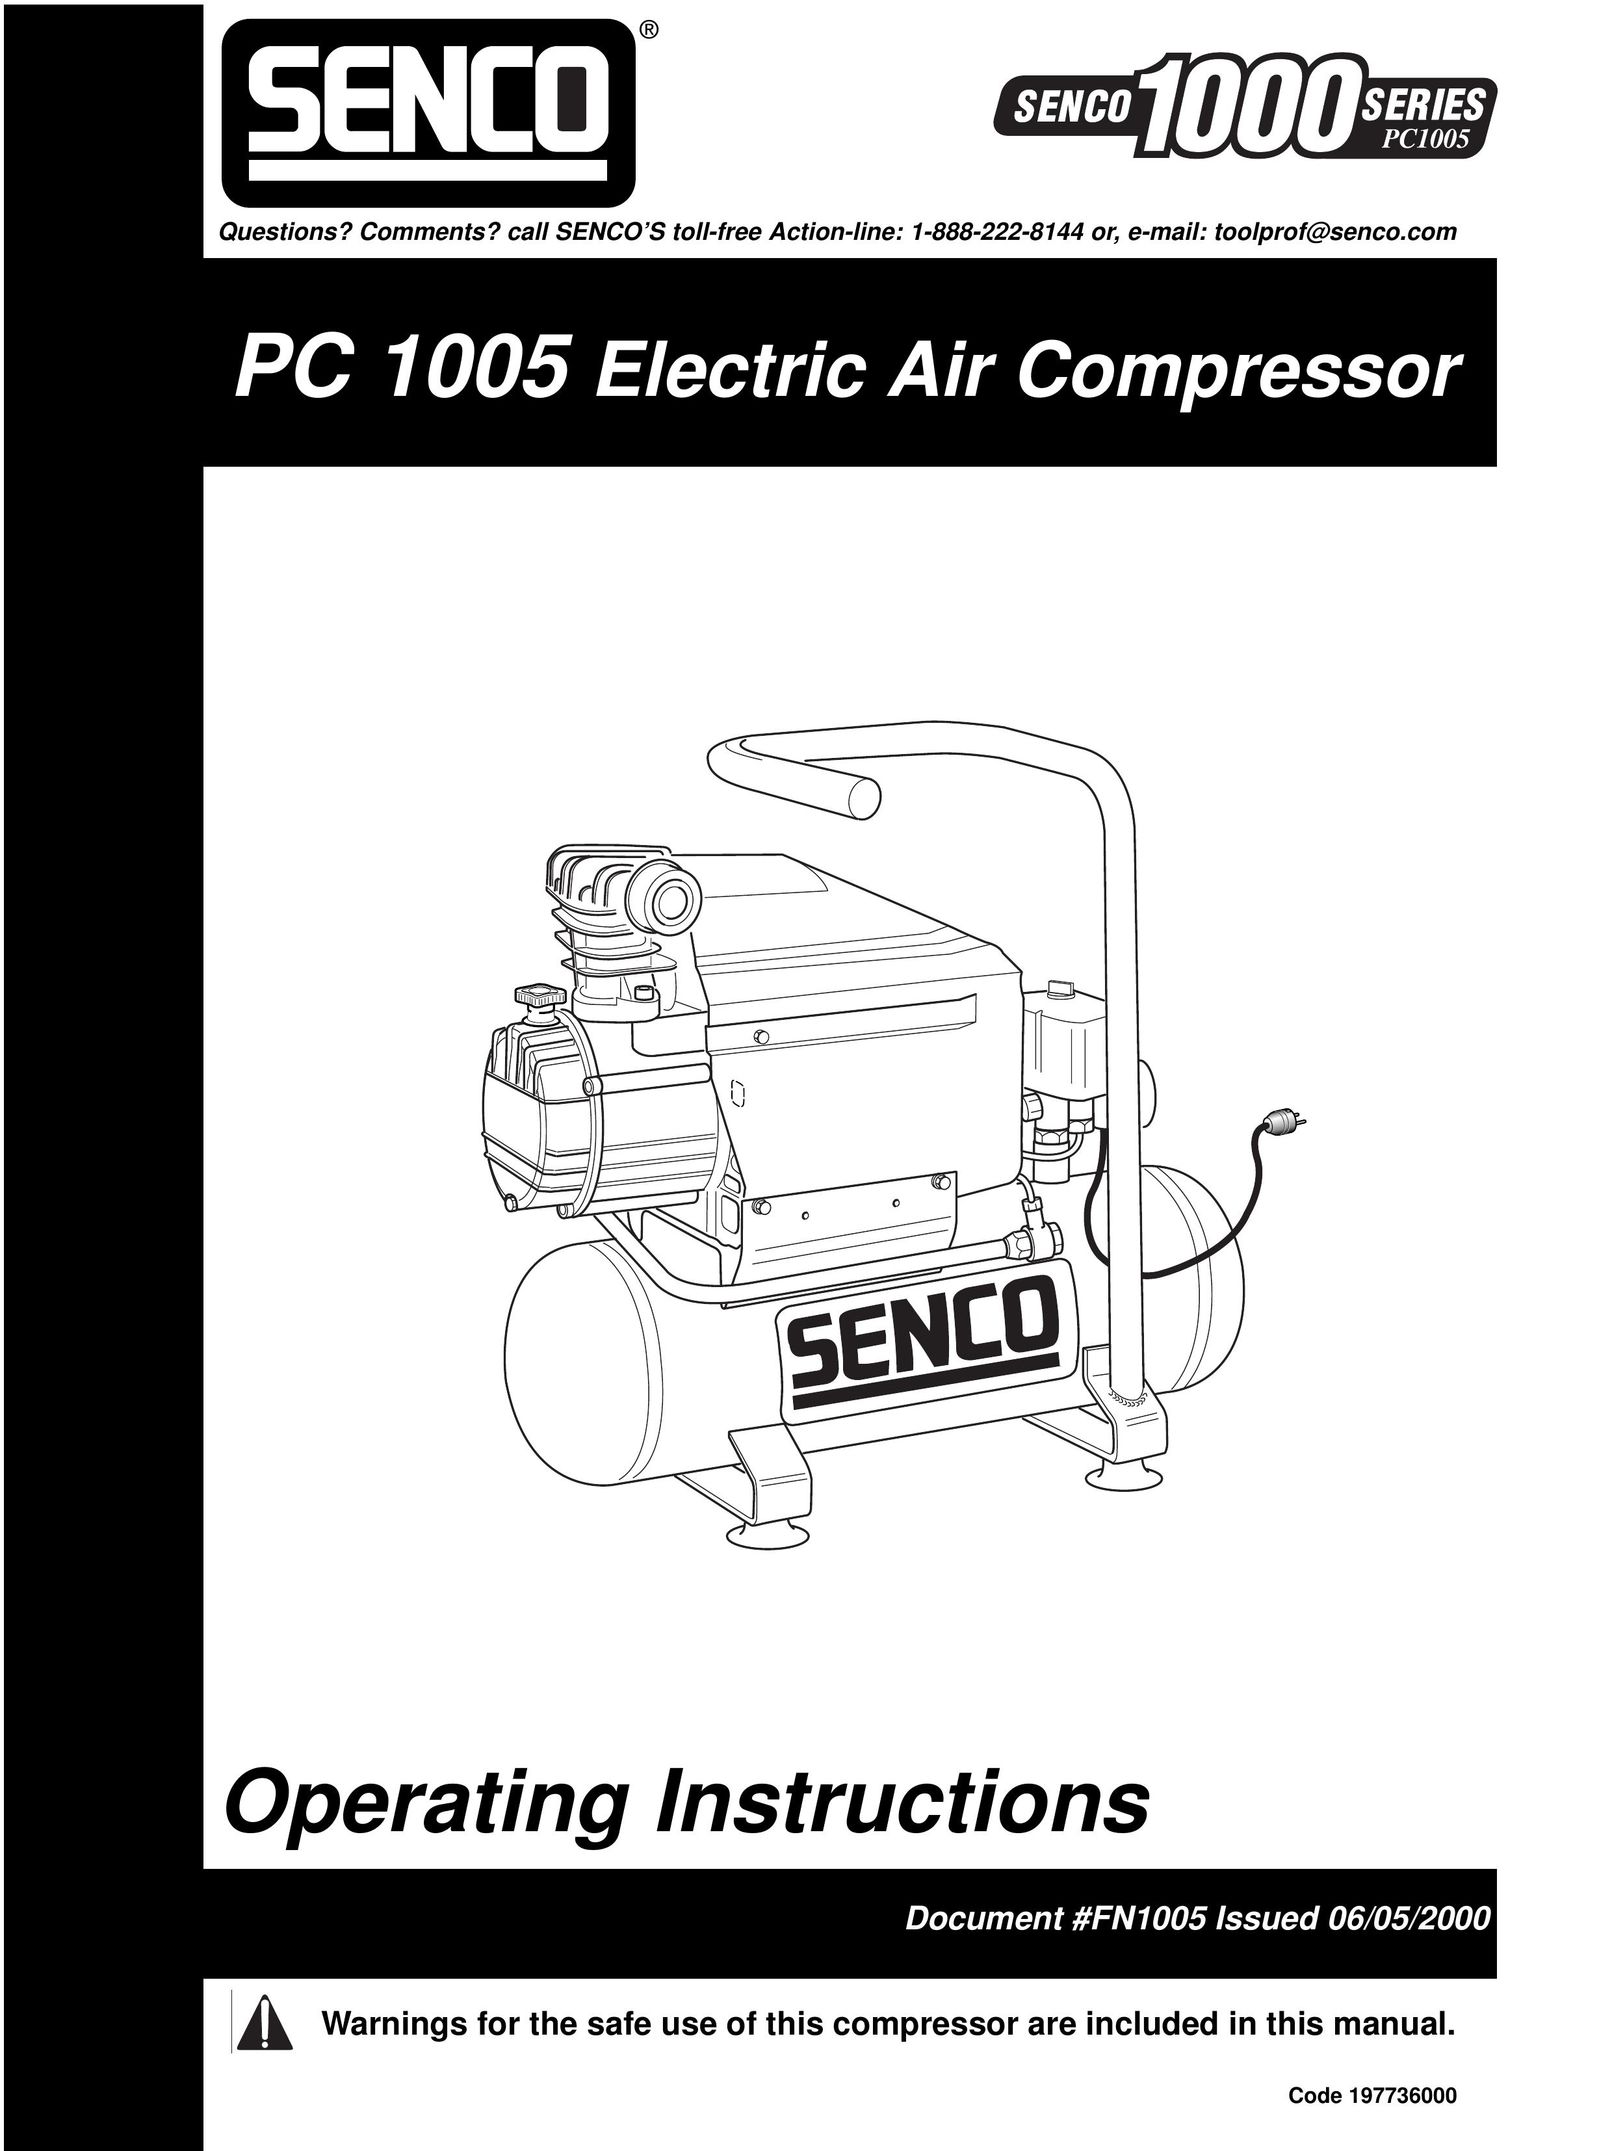 Senco PC1005 Air Compressor User Manual